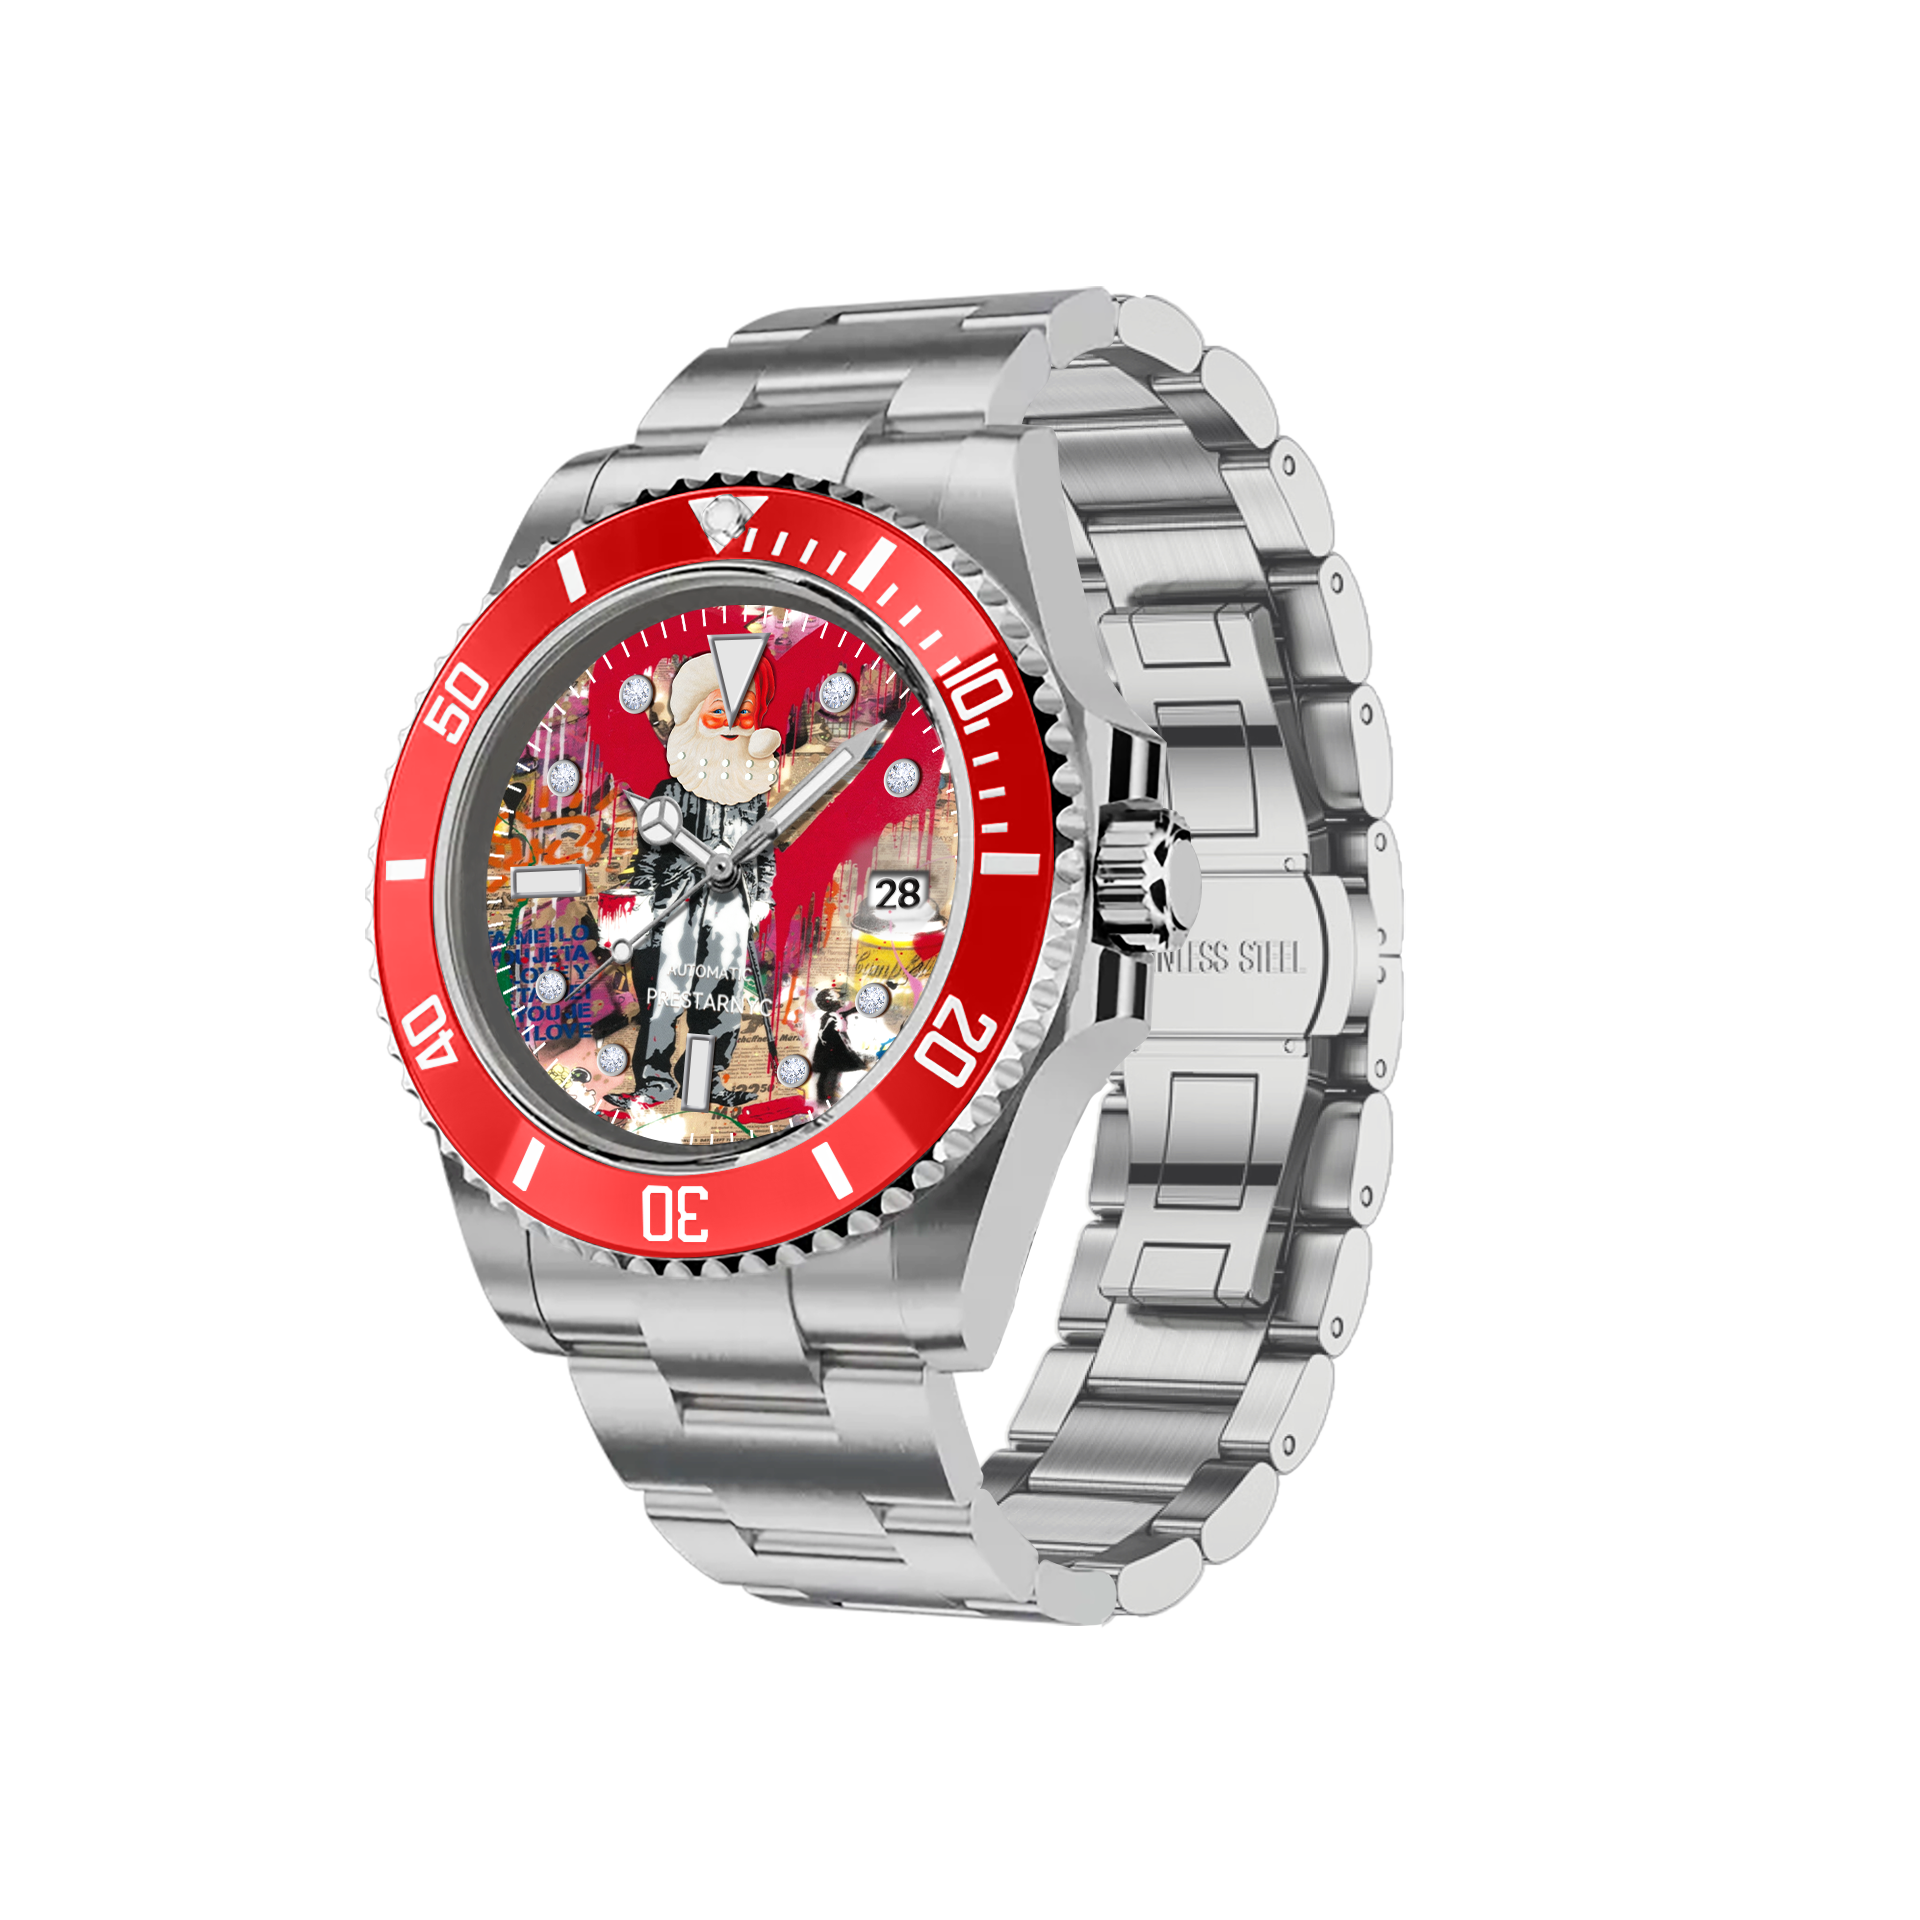 Prestar NYC Aquaman Initial Mechanical Watch (Santa in Suit)